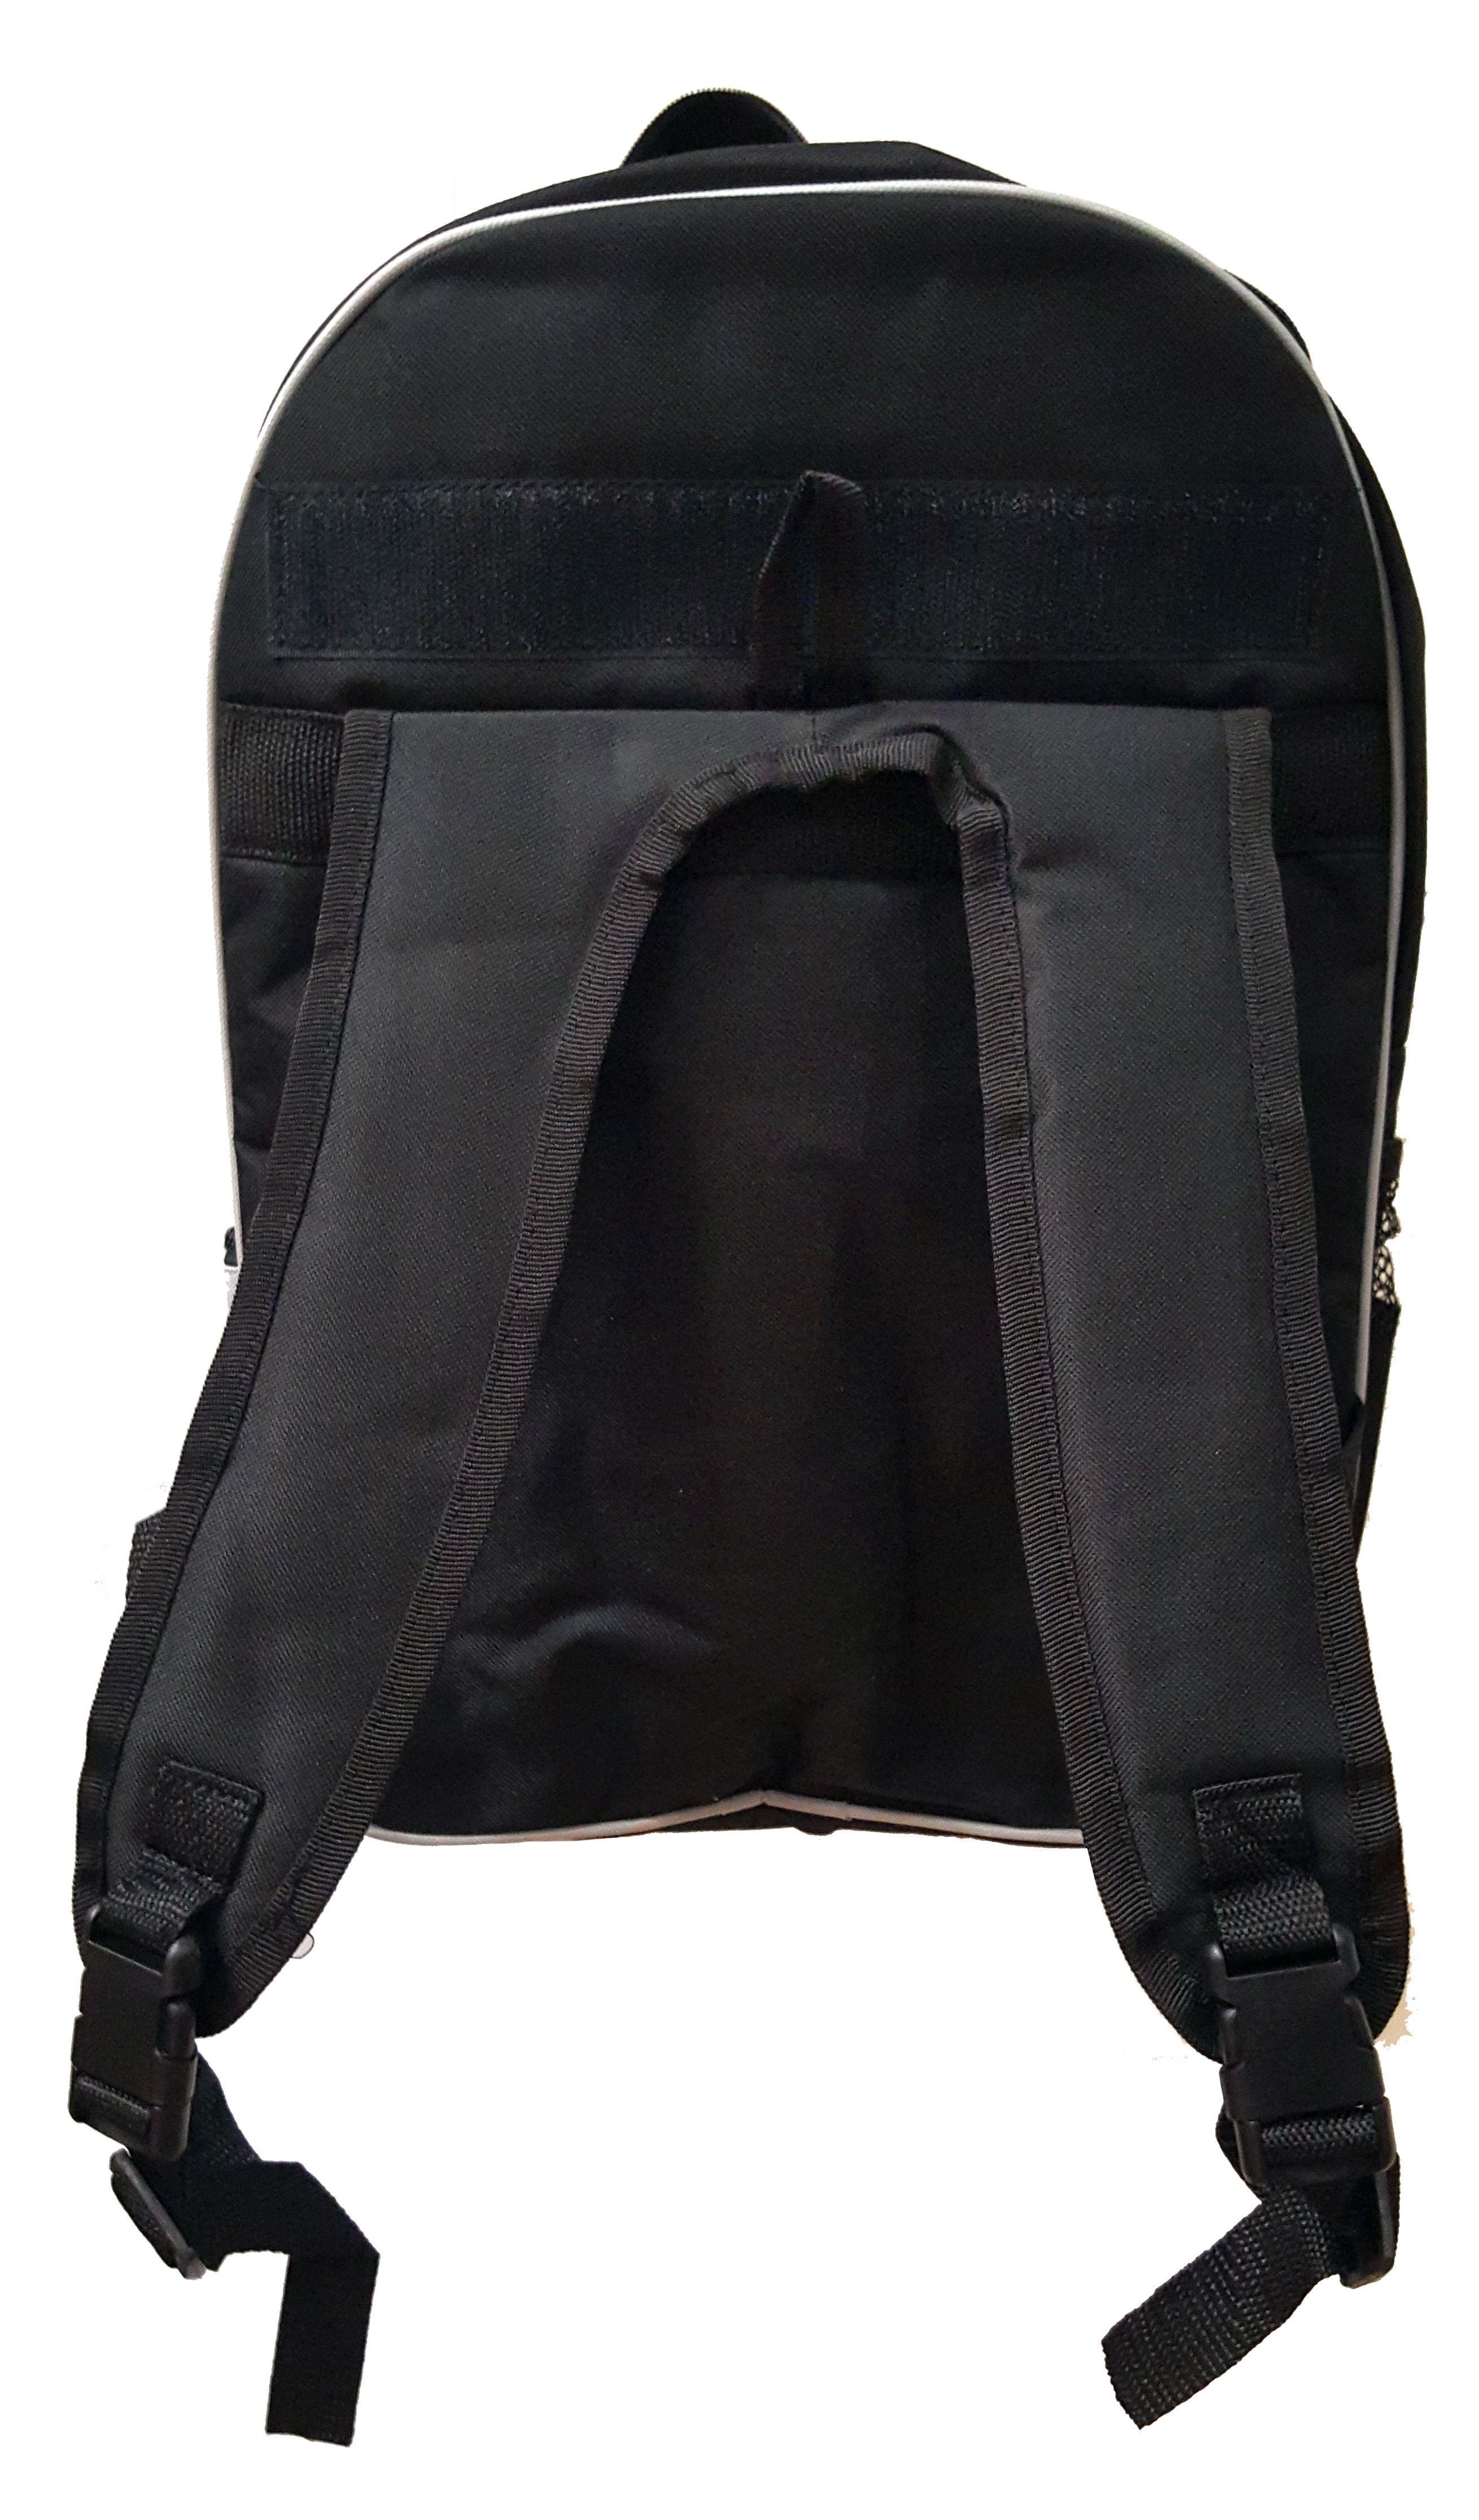 Hipster Elements on Geometric Blue Pattern - Black School Backpack & Pencil Bag - image 4 of 4